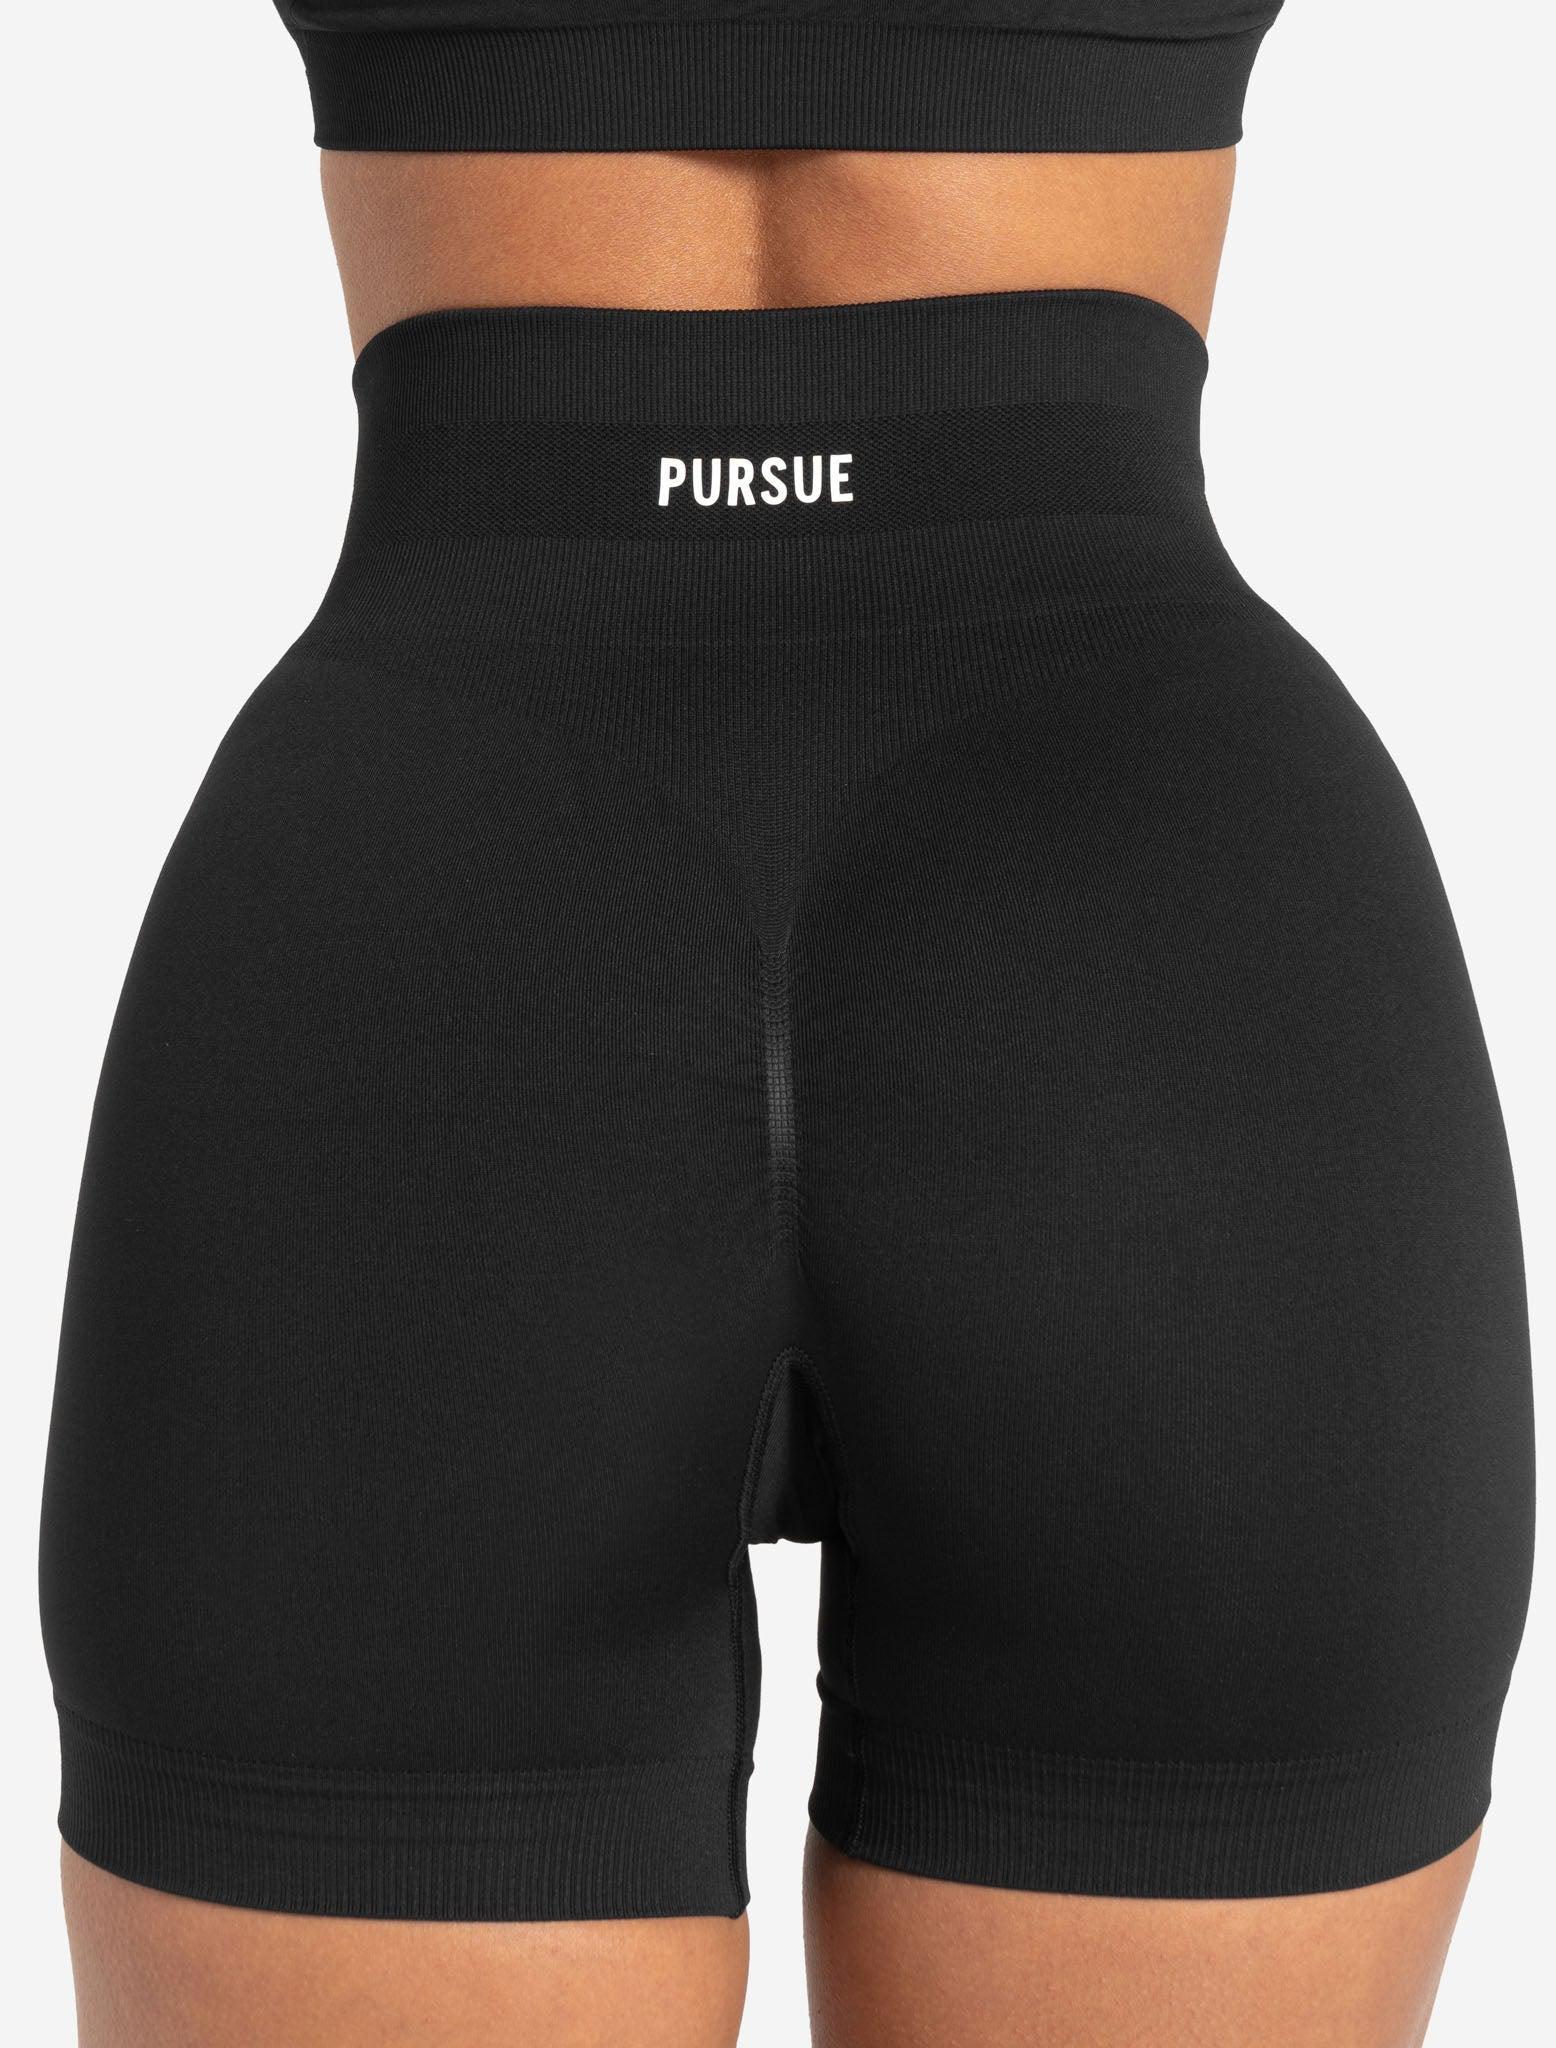 Scrunch Seamless Shorts / Black Pursue Fitness 2